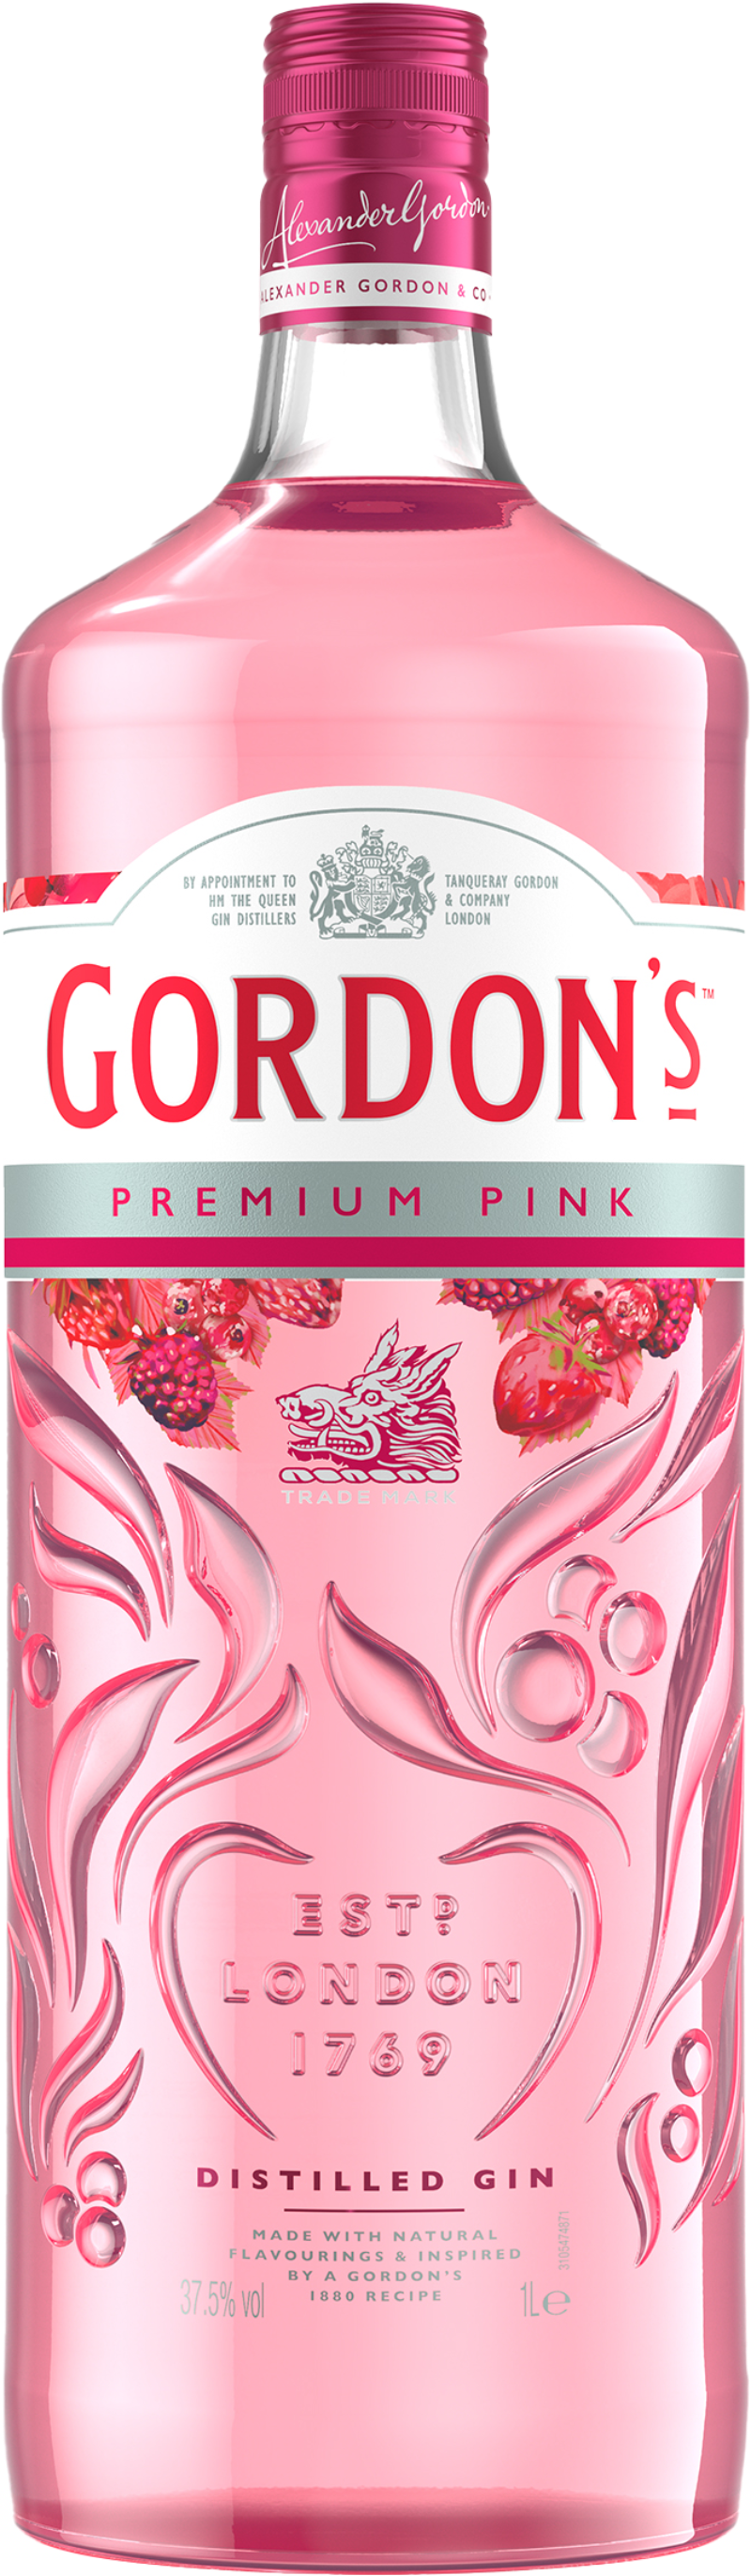 cl 37.5% - 100 Gordon\'s vol Pink Premium